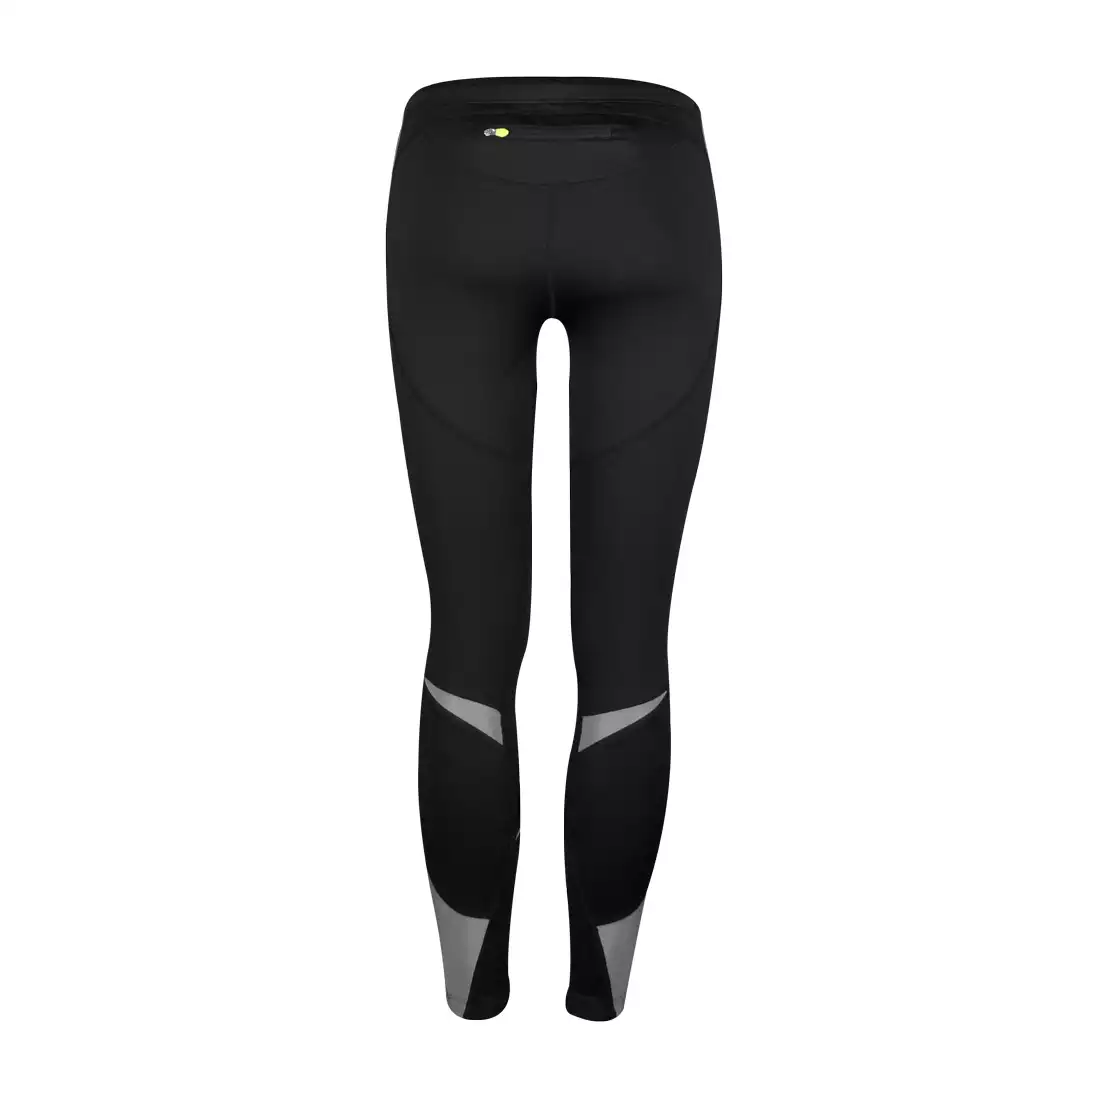 NEWLINE VISIO TIGHTS 14116-060 - męskie spodnie do biegania - kolor: Czarny-fluor